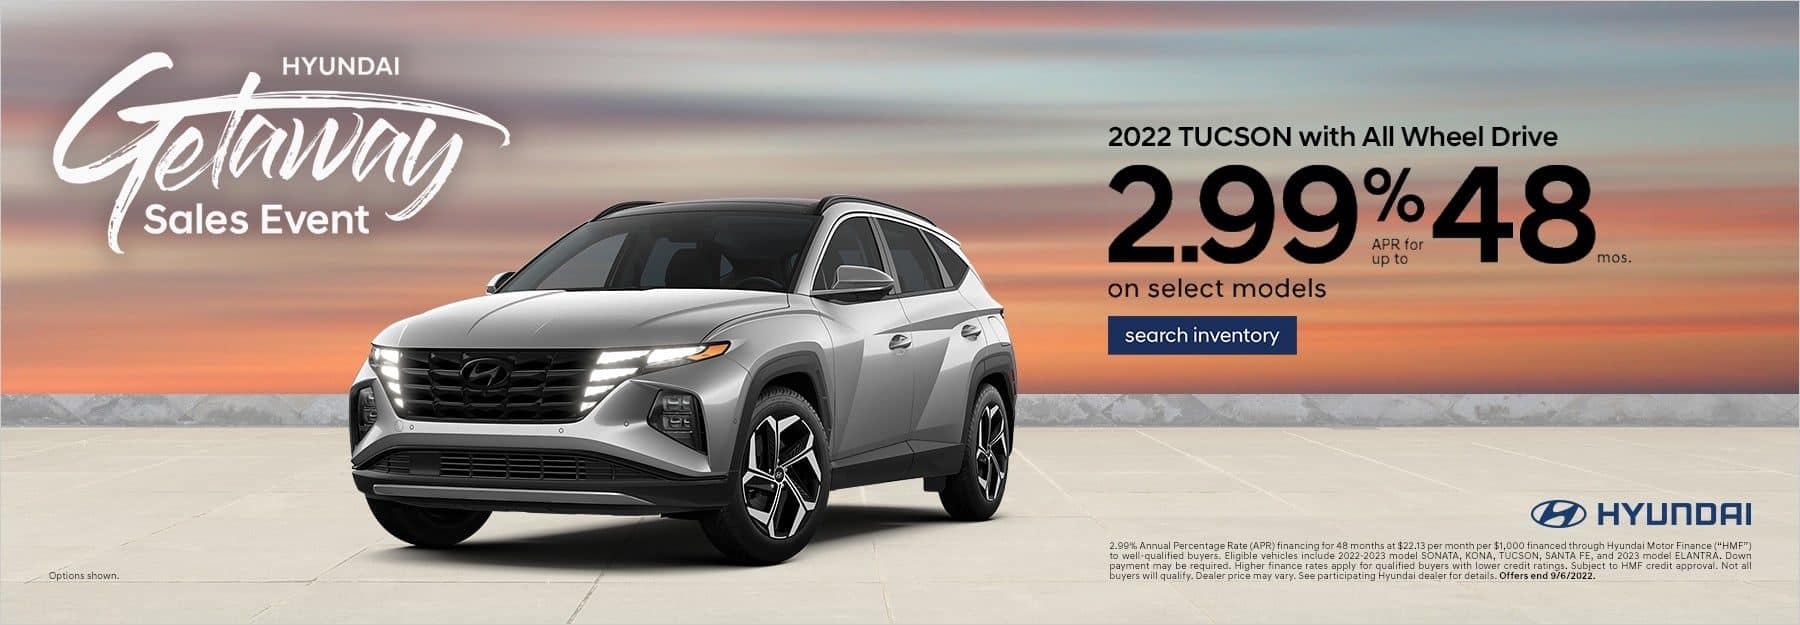 2022 Hyundai Tucson AWD offer